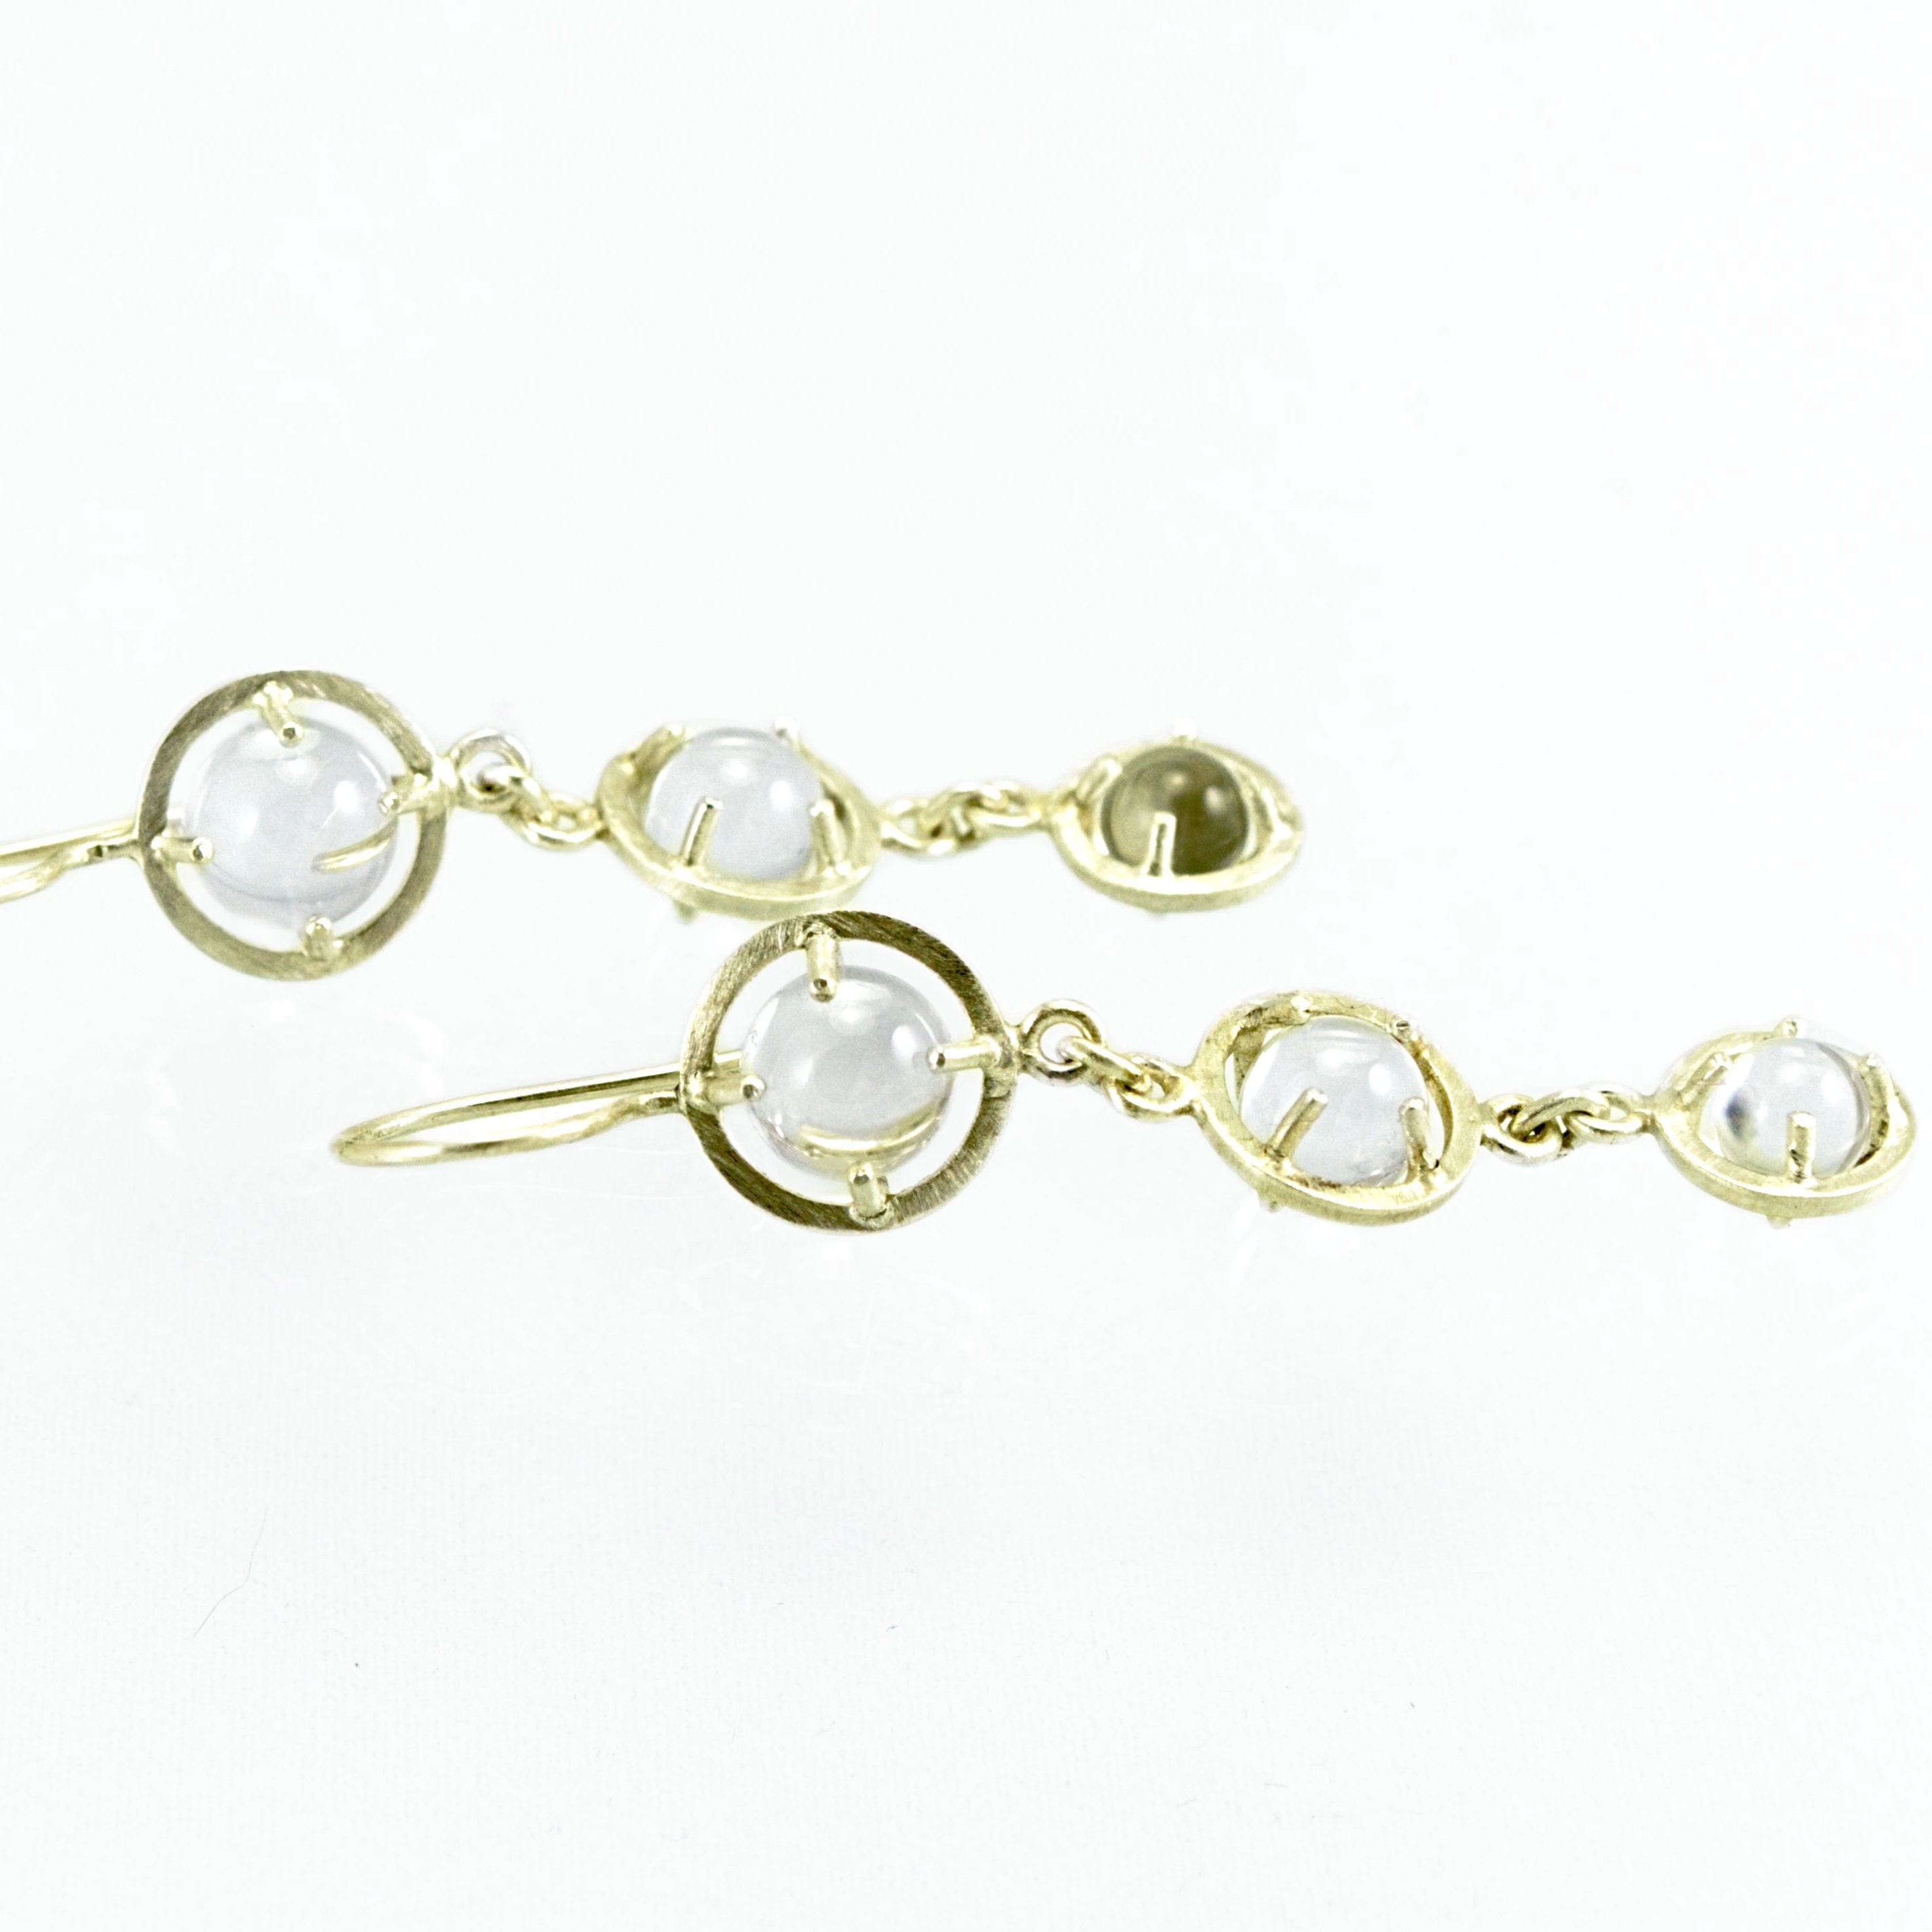 Caged 3 Sphere Chandelier Earrings - Gold